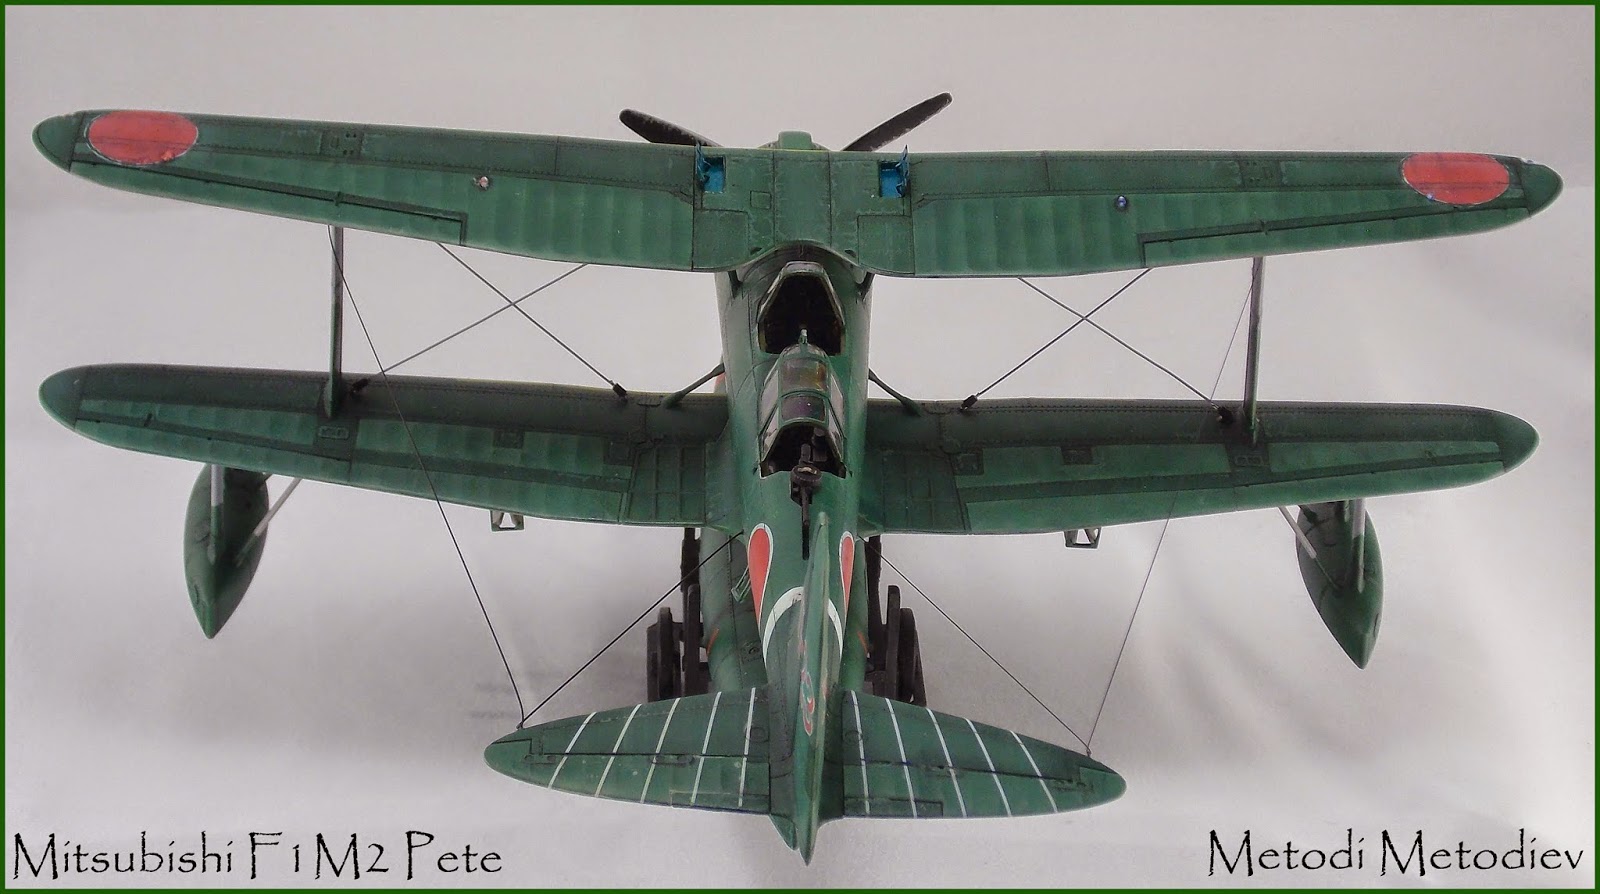 IJN Mitsubishy F1M2 Pete - Hasegawa 1:48 scale model